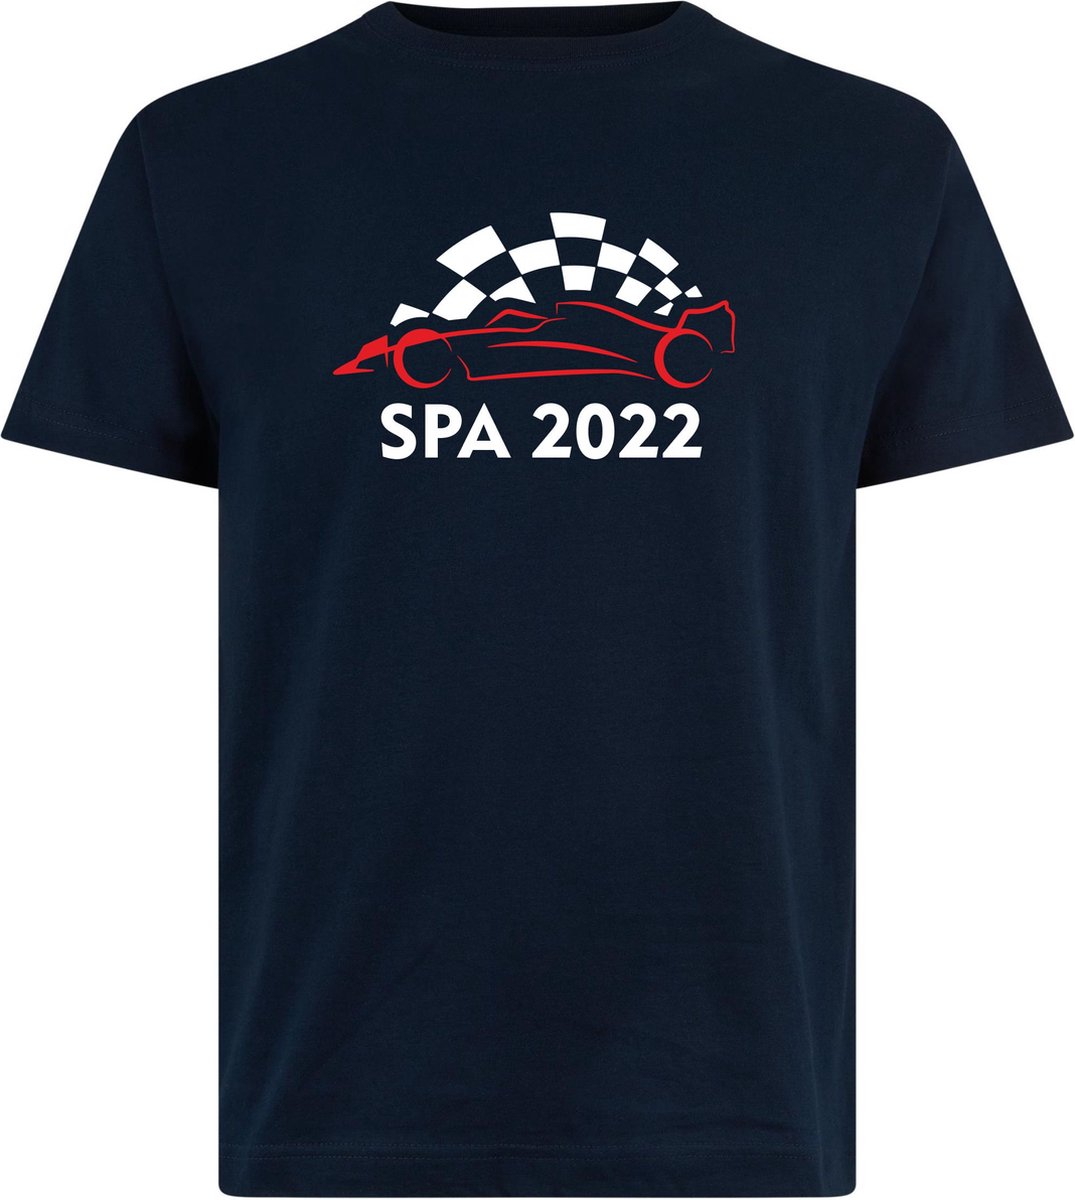 T-shirt kinderen Spa 2022 met raceauto | Max Verstappen / Red Bull Racing / Formule 1 fan | Grand Prix Circuit Spa-Francorchamps | kleding shirt | Navy | maat 140